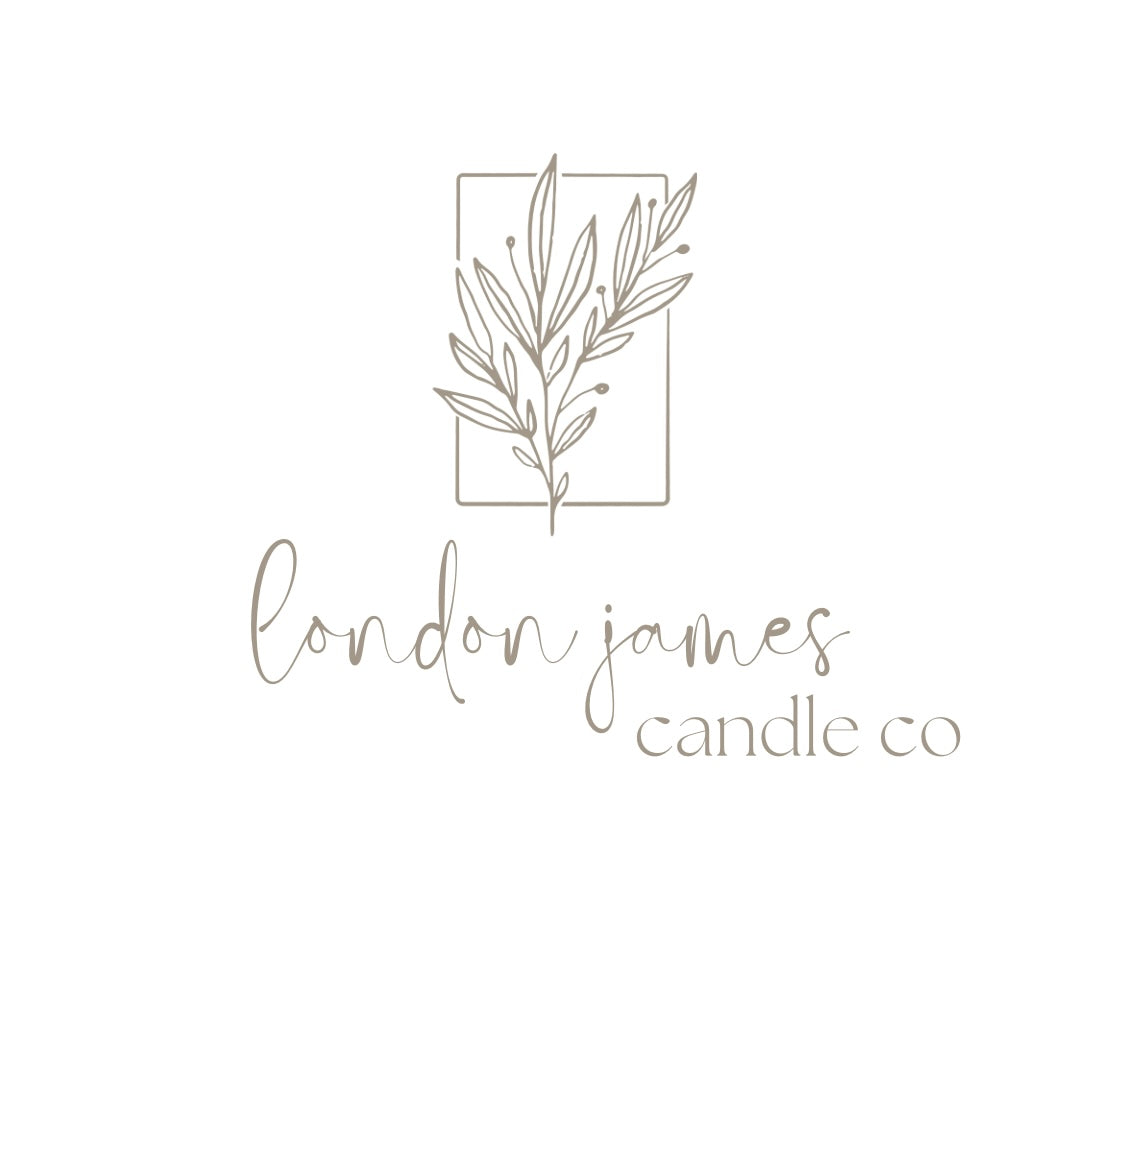 London James Candle Co e-Gift Card